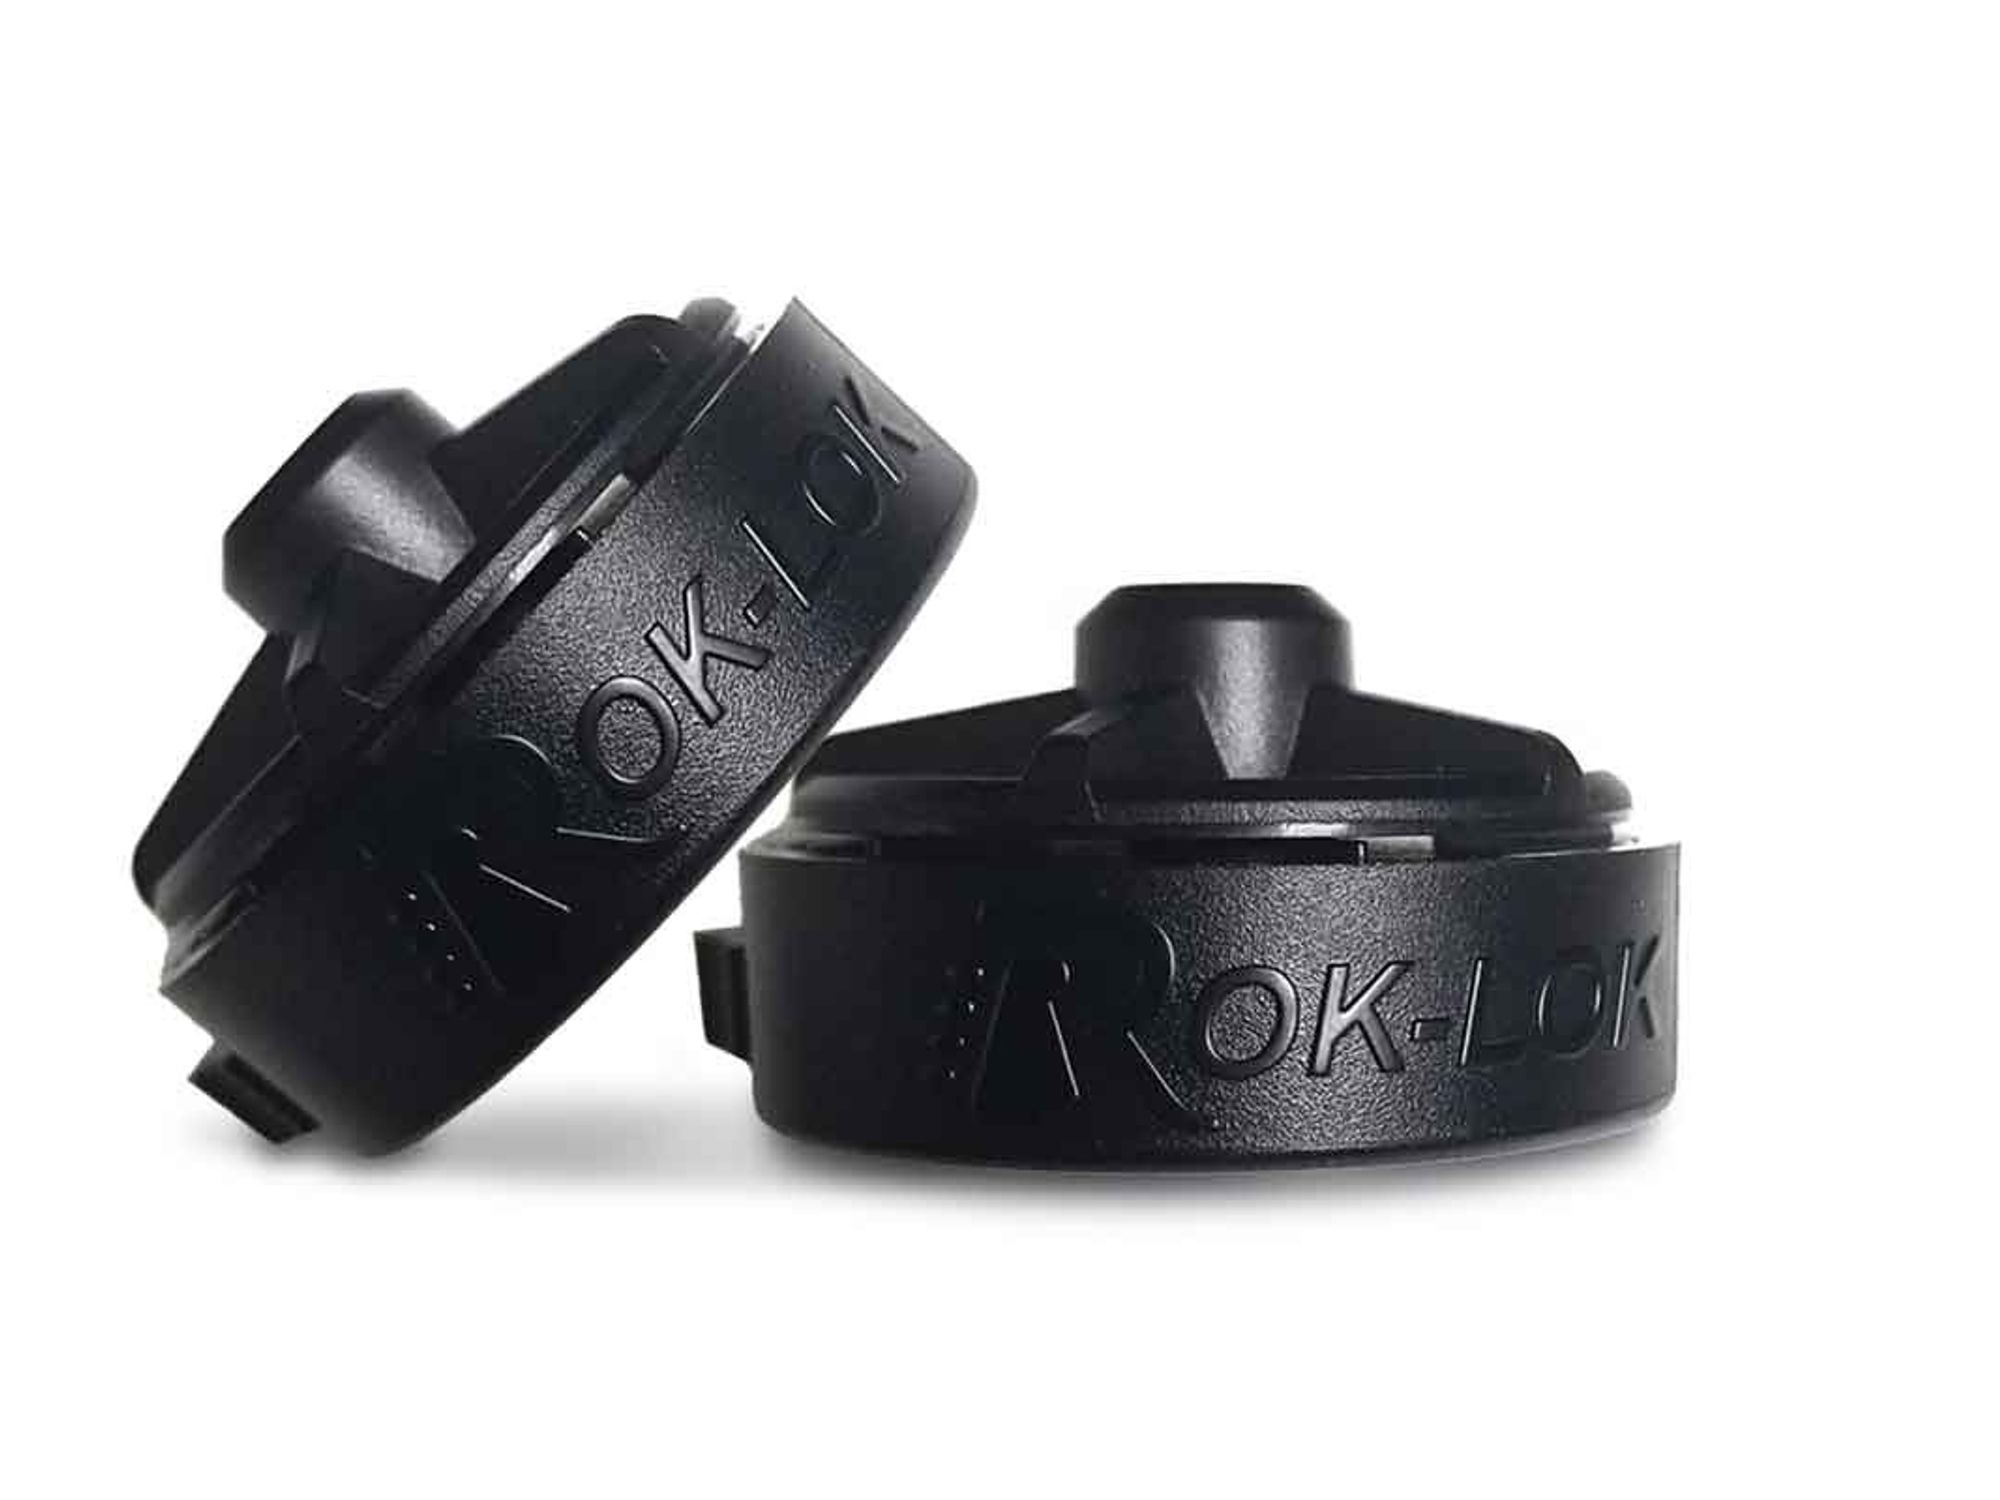 Rok-Lok Introduces the Universal Quick Change Strap Lock